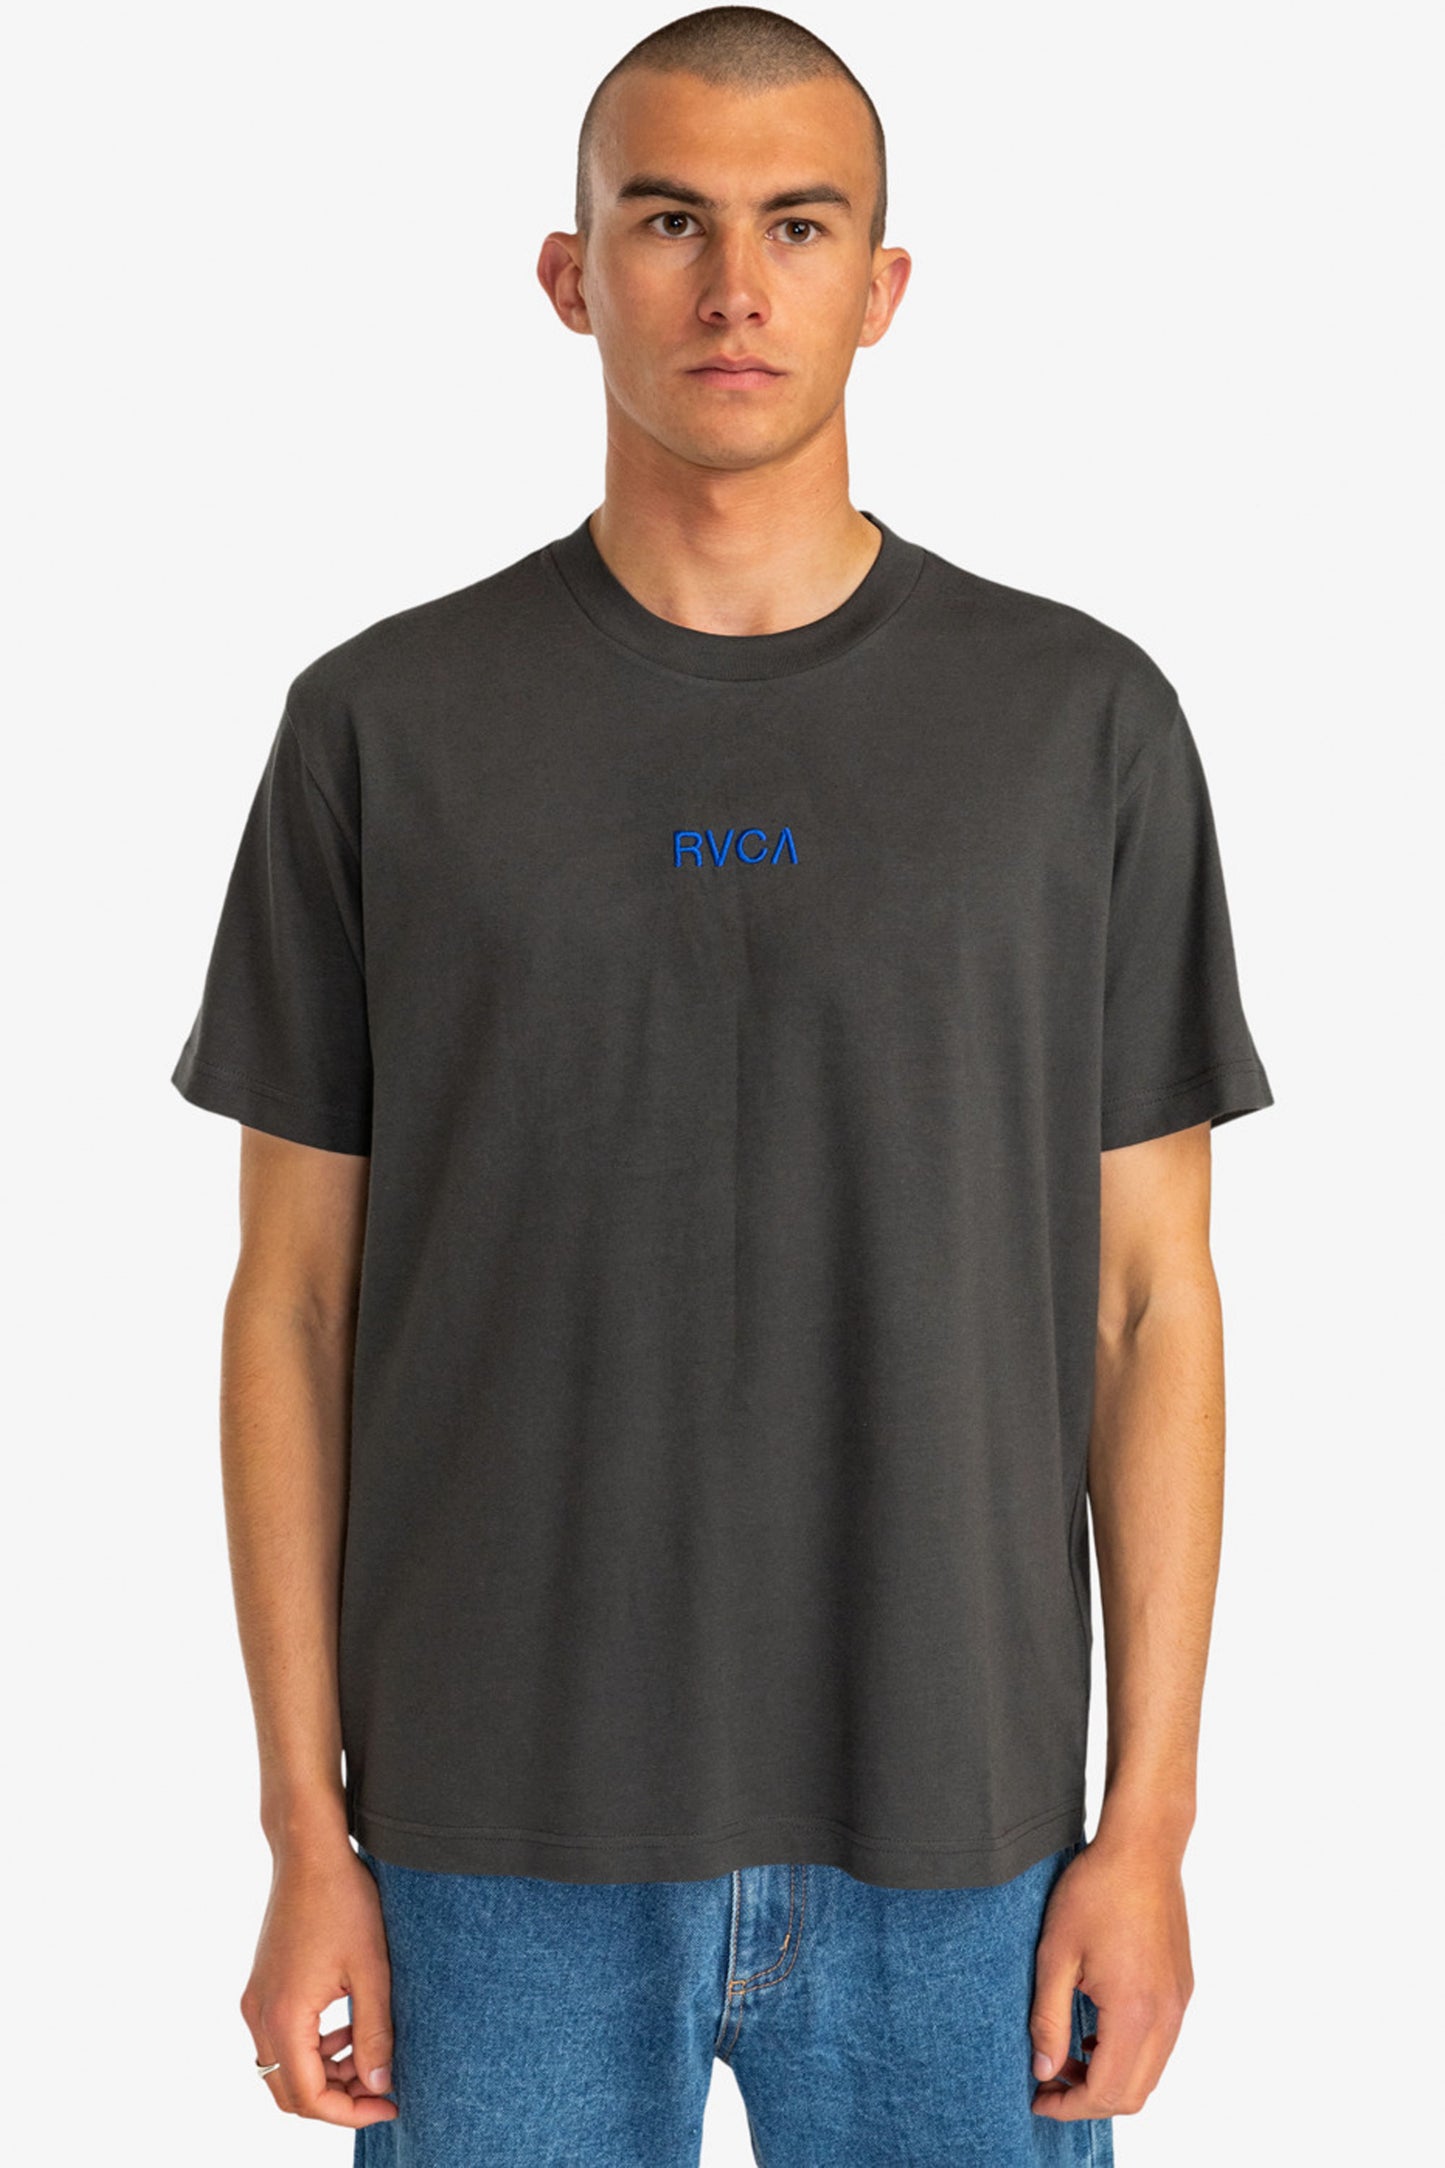 RVCA Clothing for MEN  Shop online at PUKAS SURF SHOP